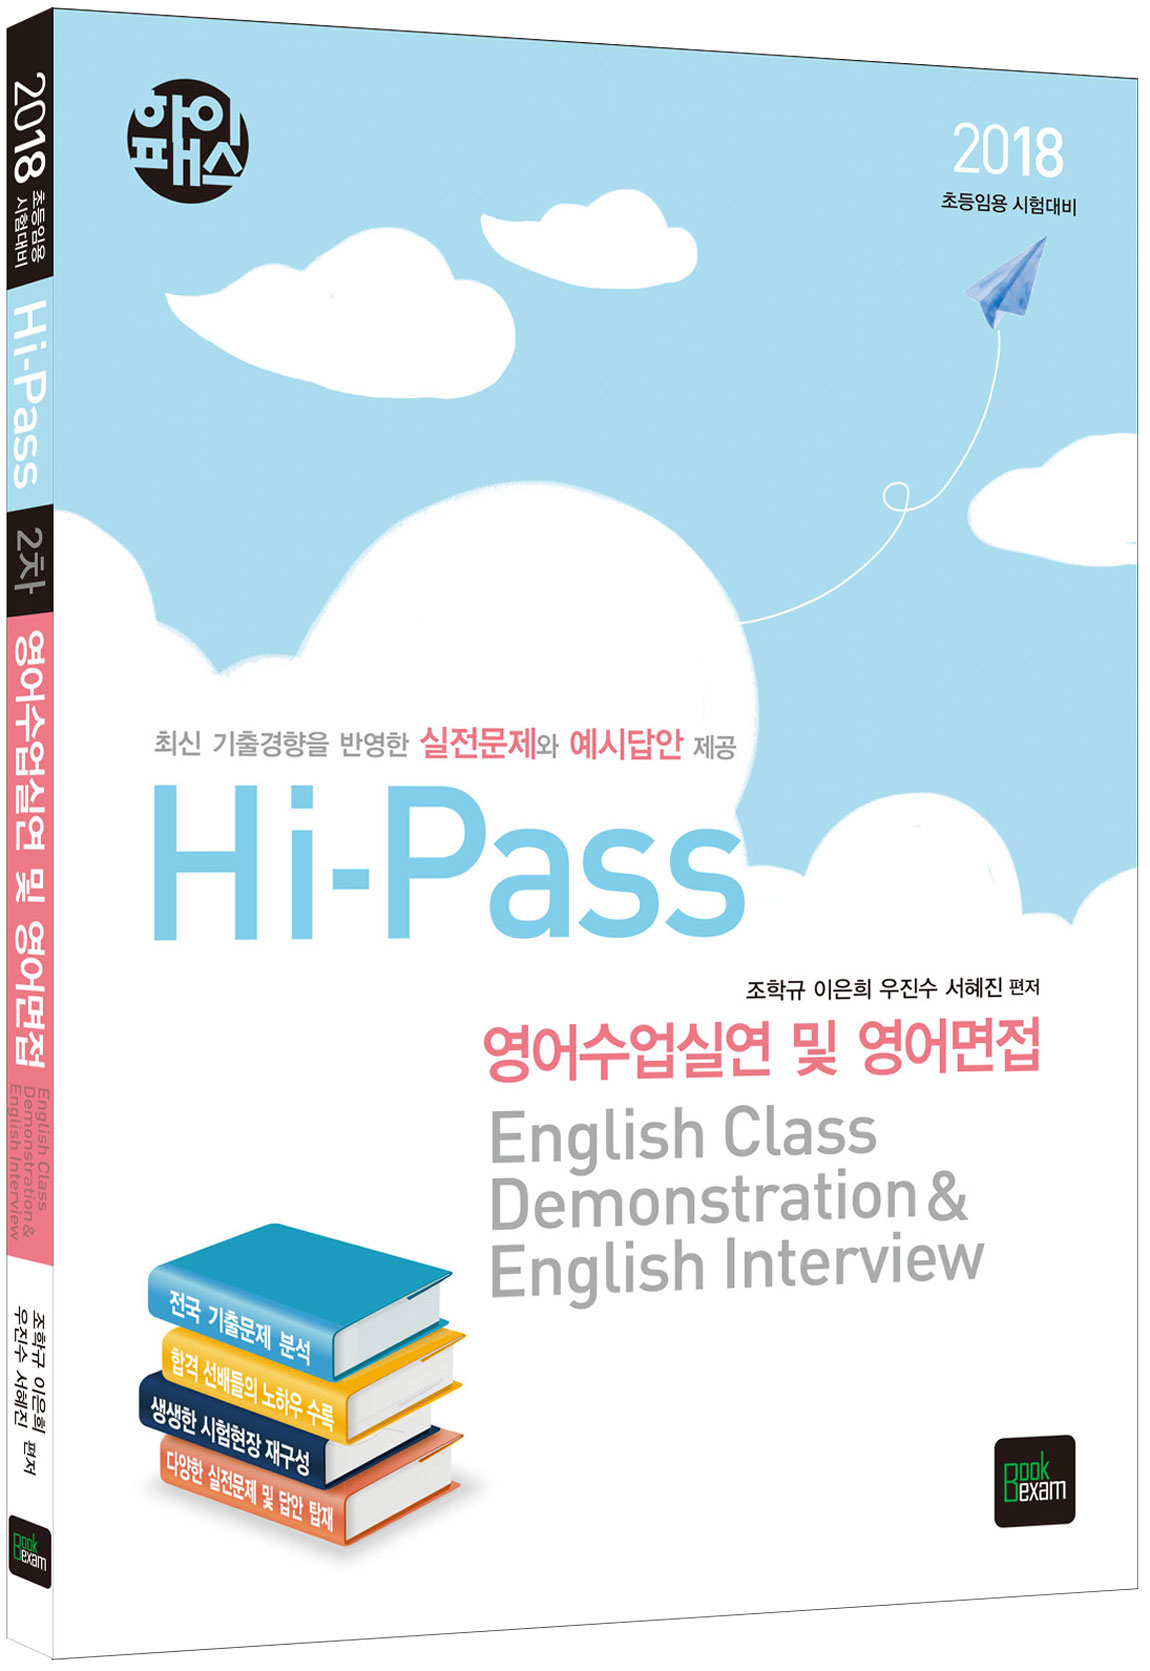 2018 Hi-Pass 2차 영어수업실연 및 영어면접 ★미니수첩 증정